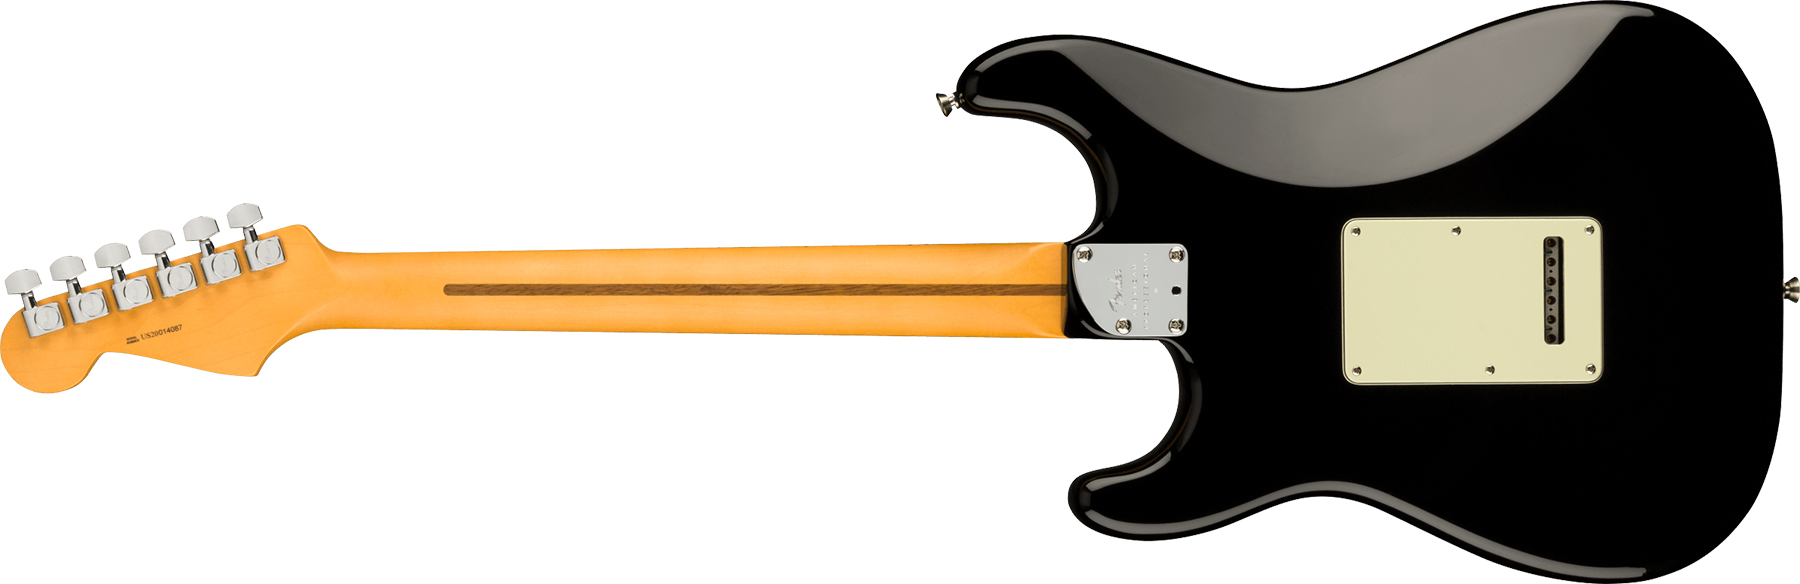 Fender Strat American Professional Ii Usa Mn - Black - Str shape electric guitar - Variation 1